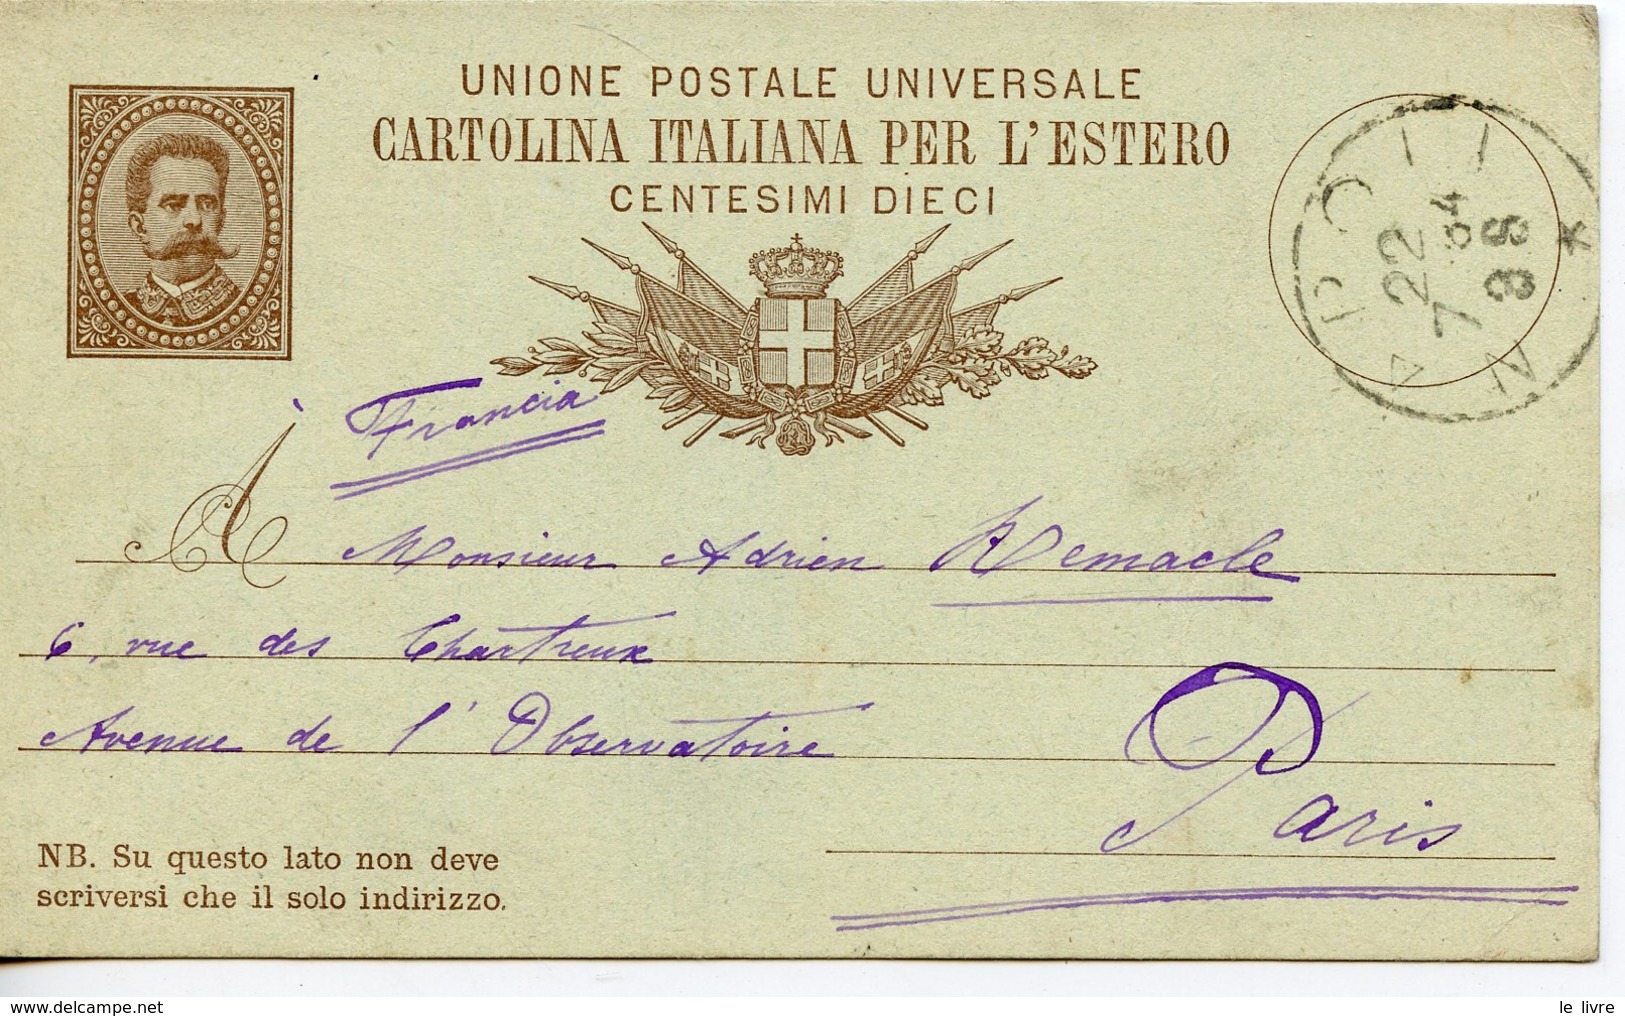 ITALIE. CARTOLINA ITALIANA PER L'ESTERO 1884 DE NAPOLI A PARIS CACHETS